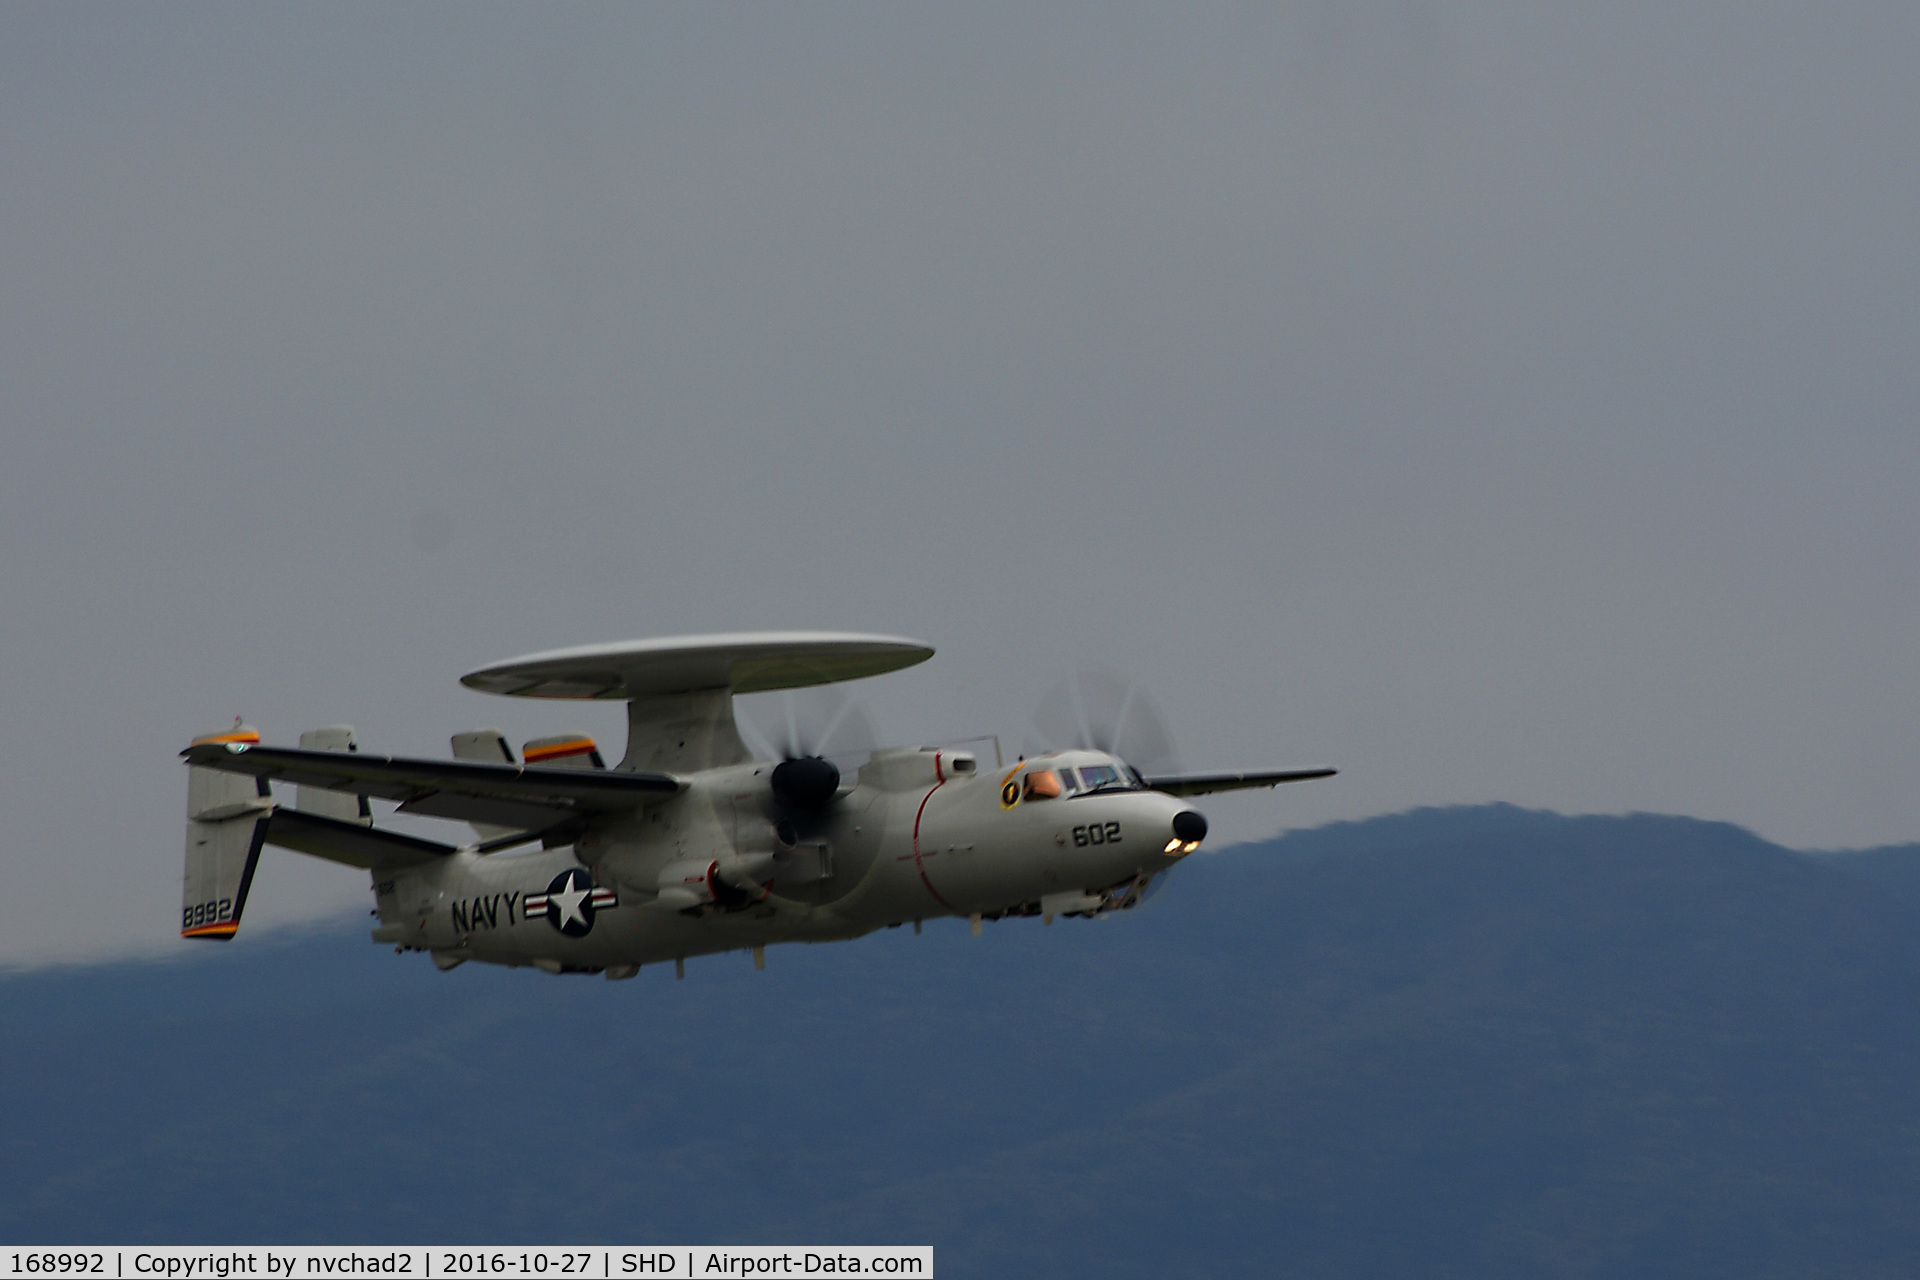 168992, Northrop Grumman E-2D Advanced Hawkeye C/N AA24, E-2D Hawkeye performing touch-and-go landings at SHD airport in Weyers Cave, VA